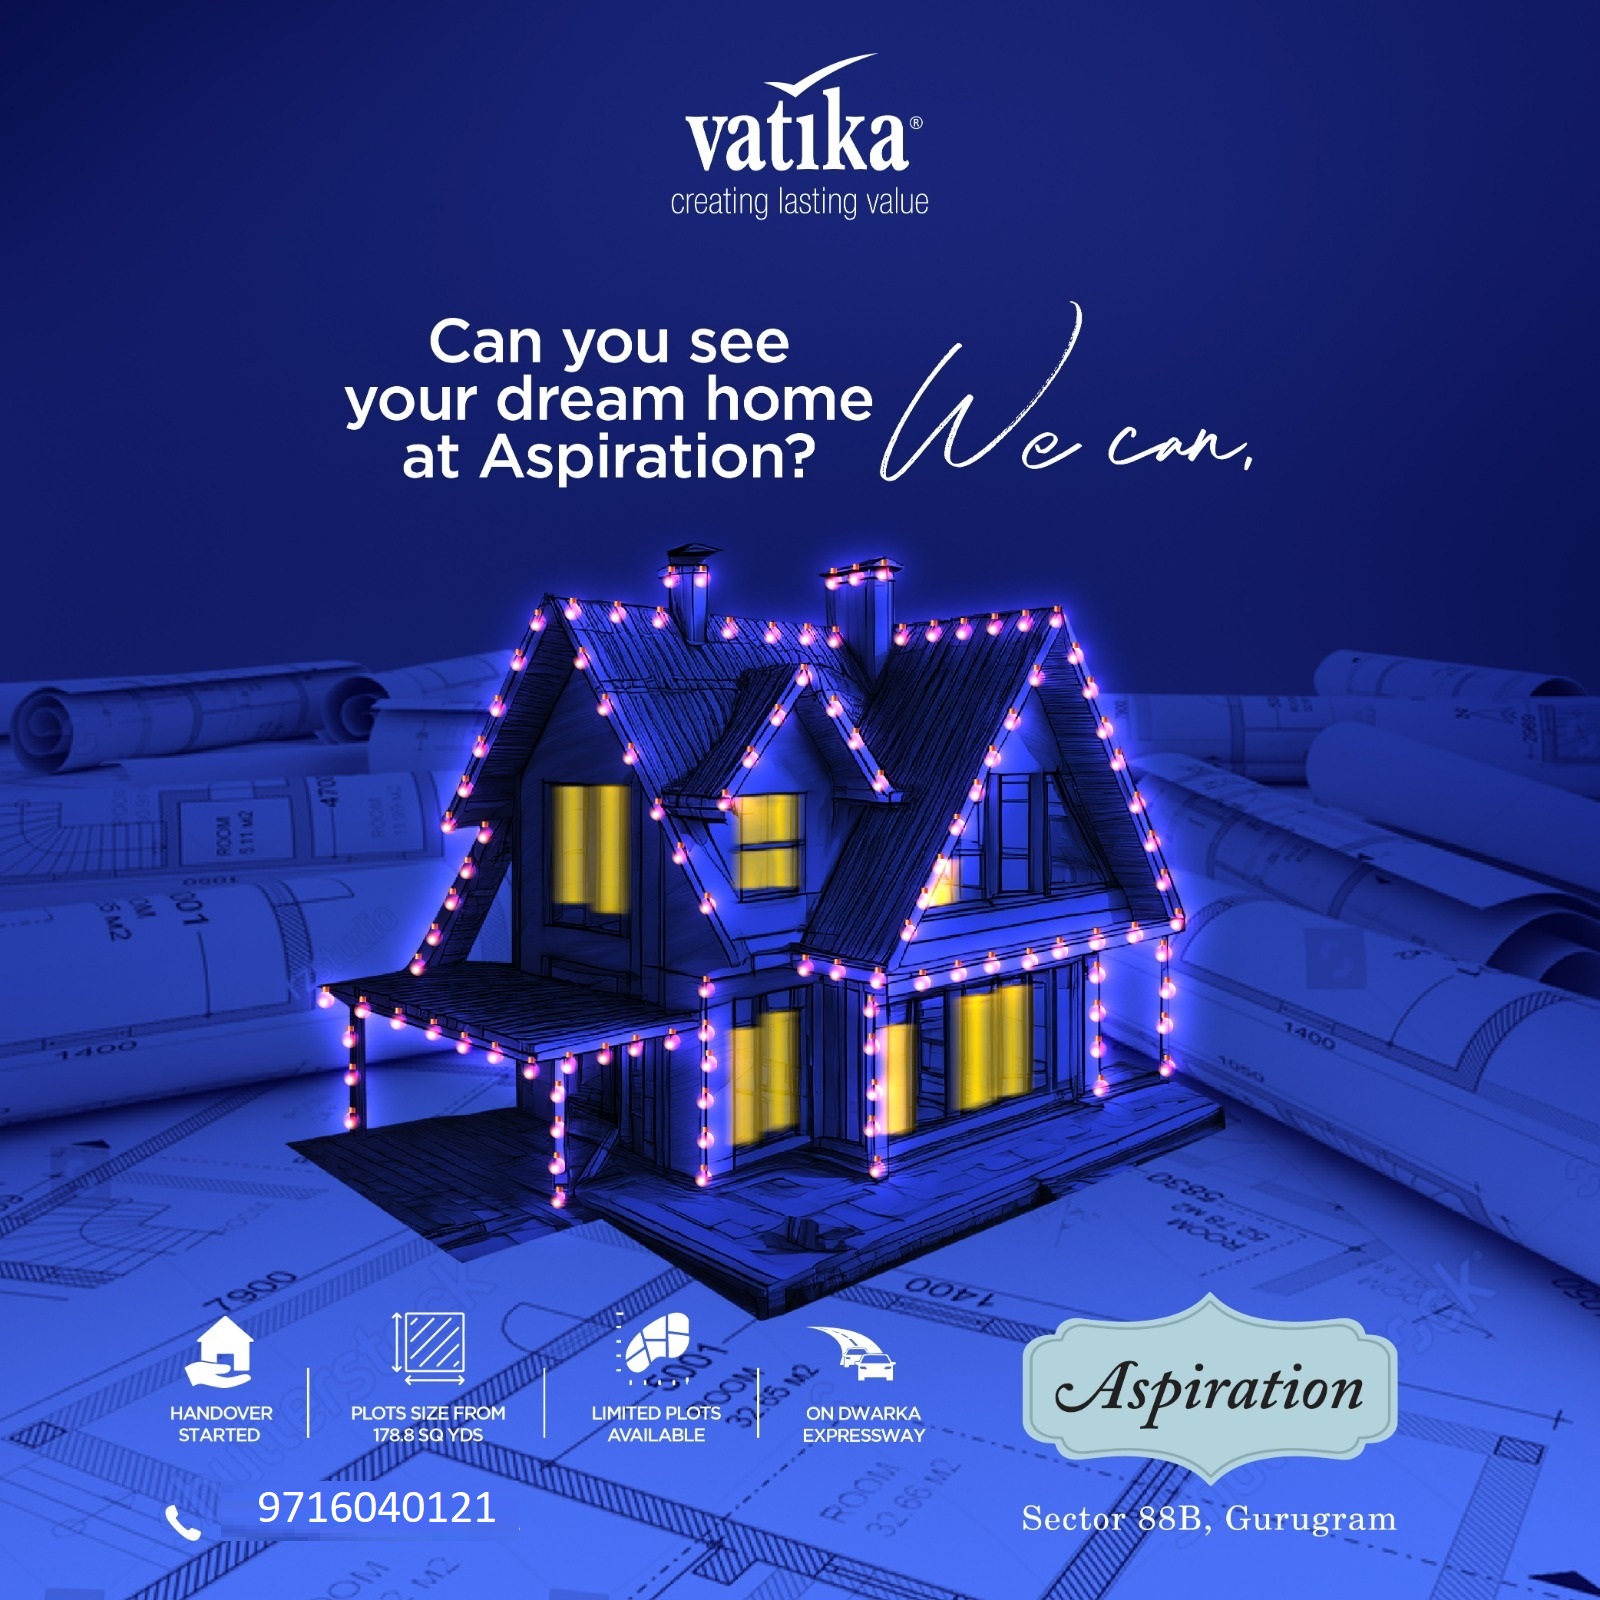 Vatika's Aspiration in Sector 88B, Gurugram: Envisioning Your Dream Home Update